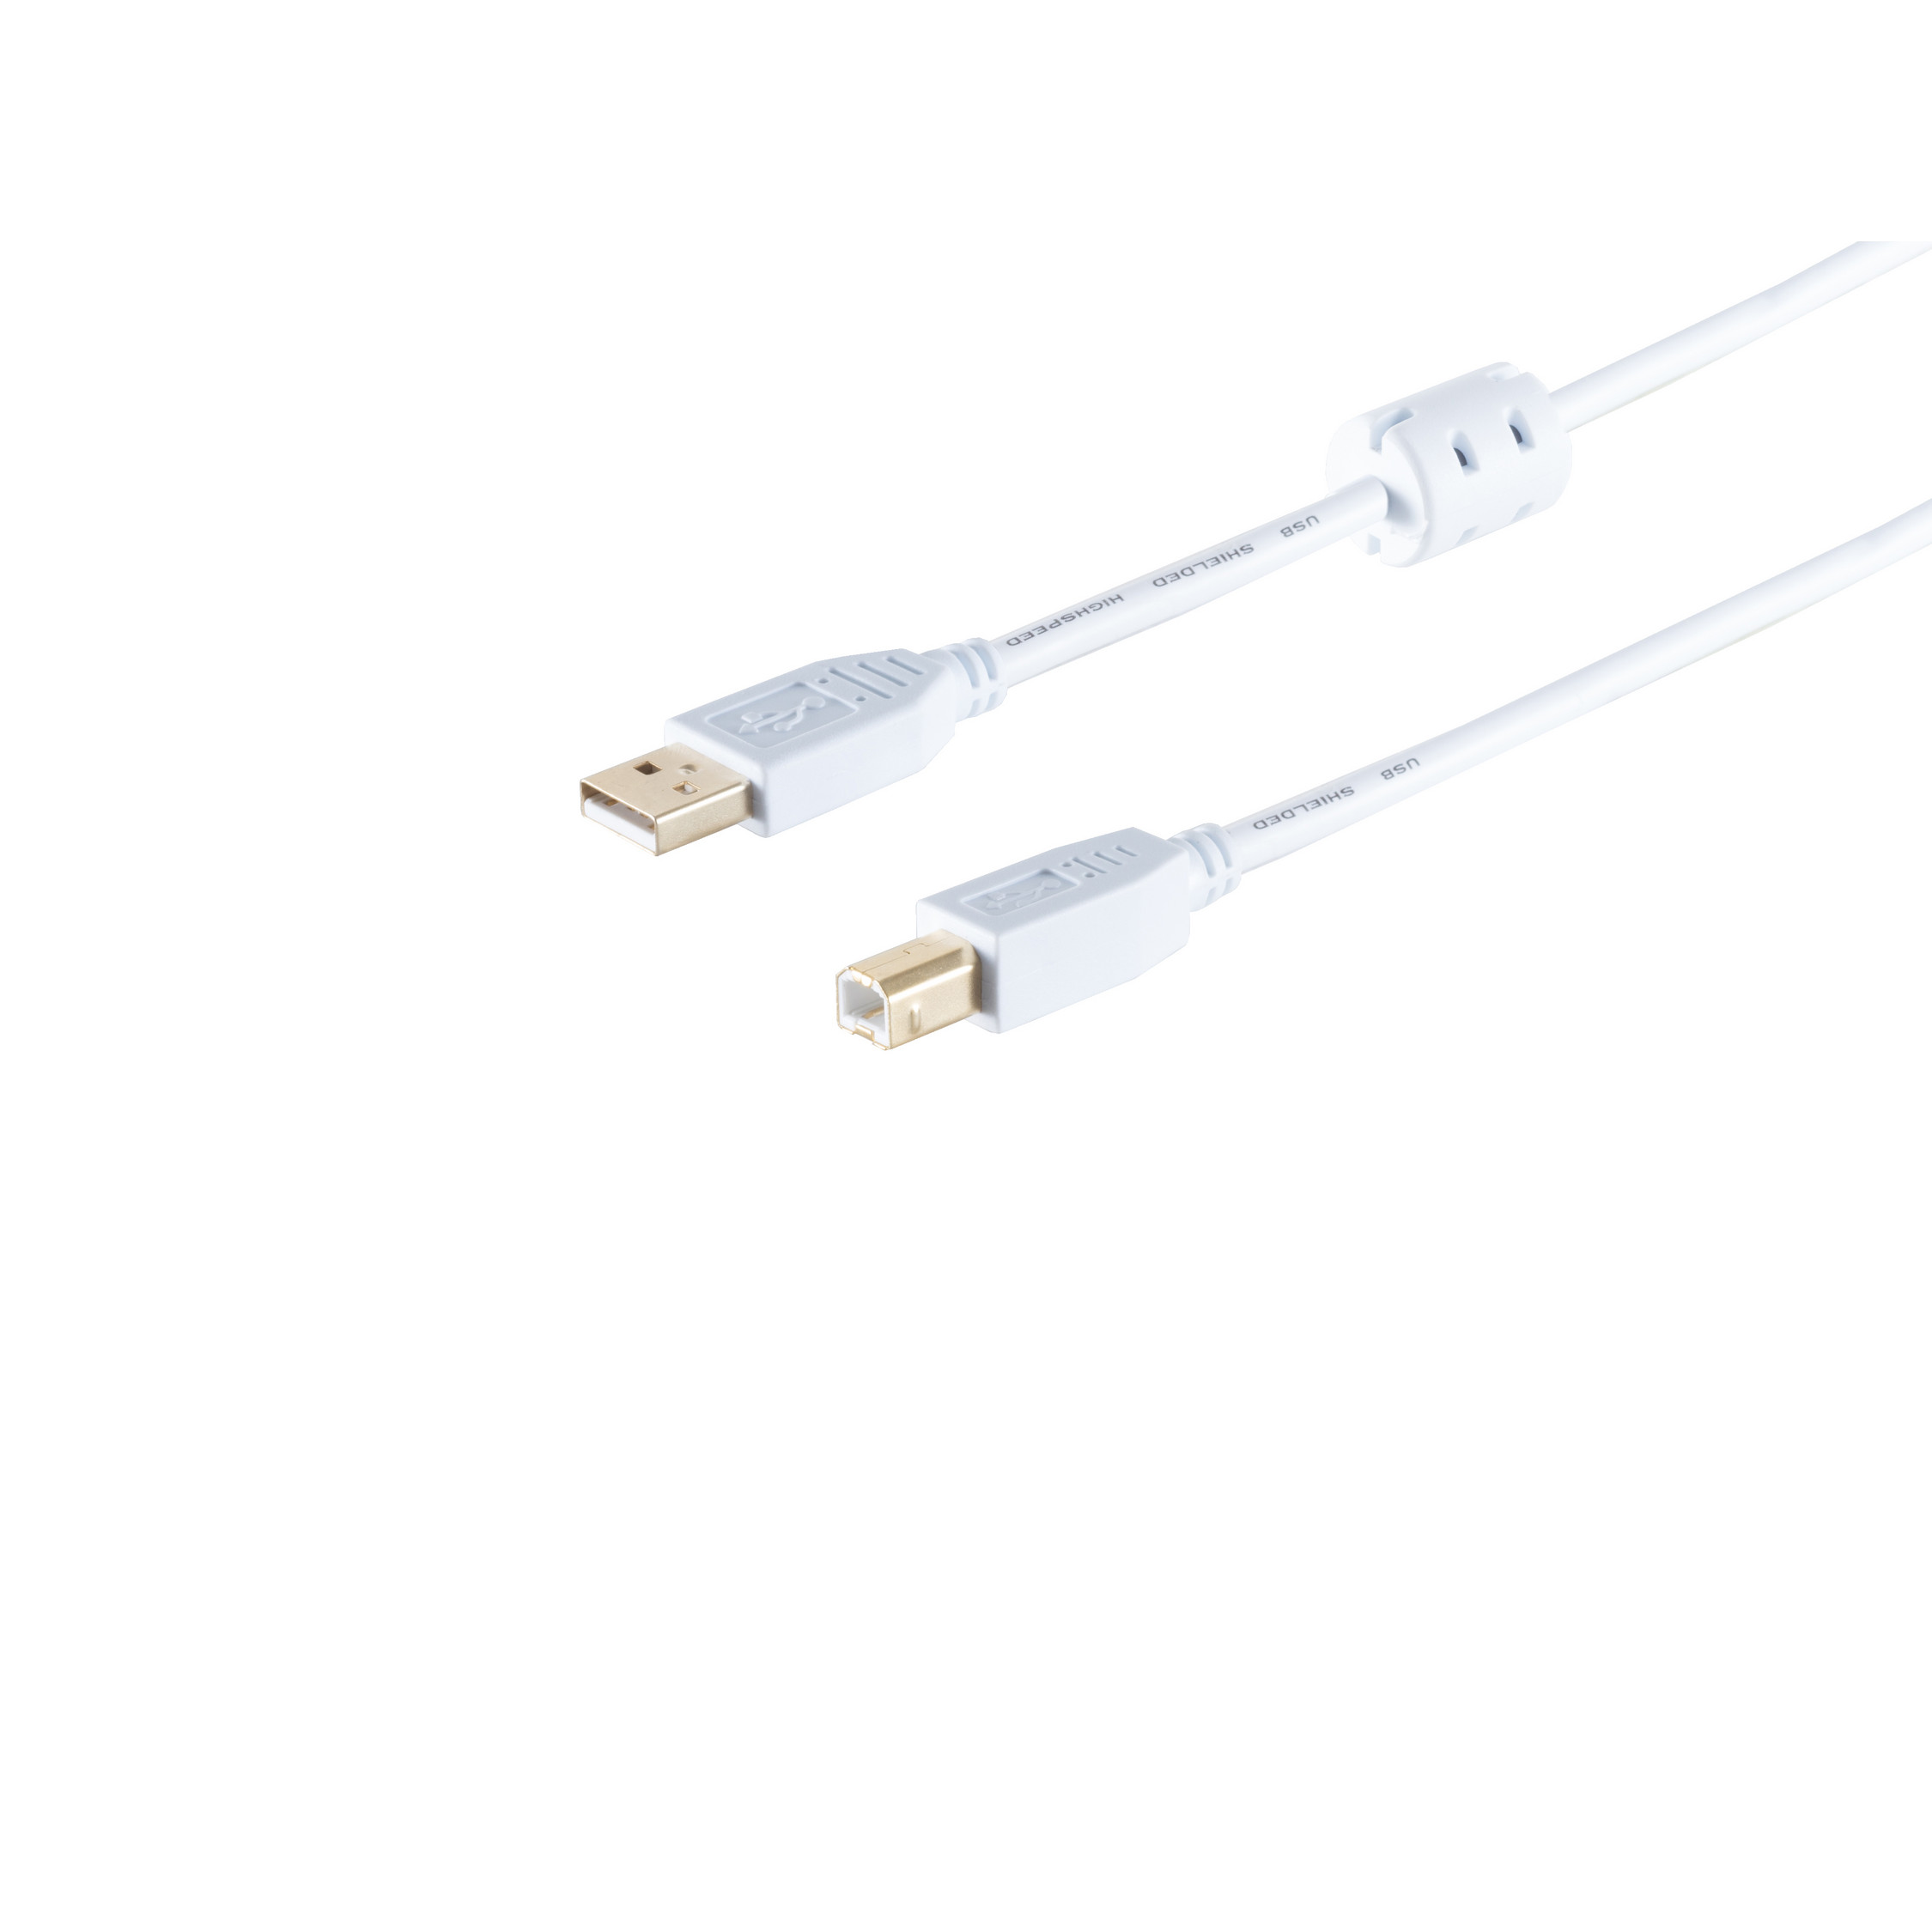 S/CONN MAXIMUM CONNECTIVITY A/B 2.0, USB 1,8m USB Kabel Stecker, USB High Kabel weiß, Speed 2.0 mit Ferrit